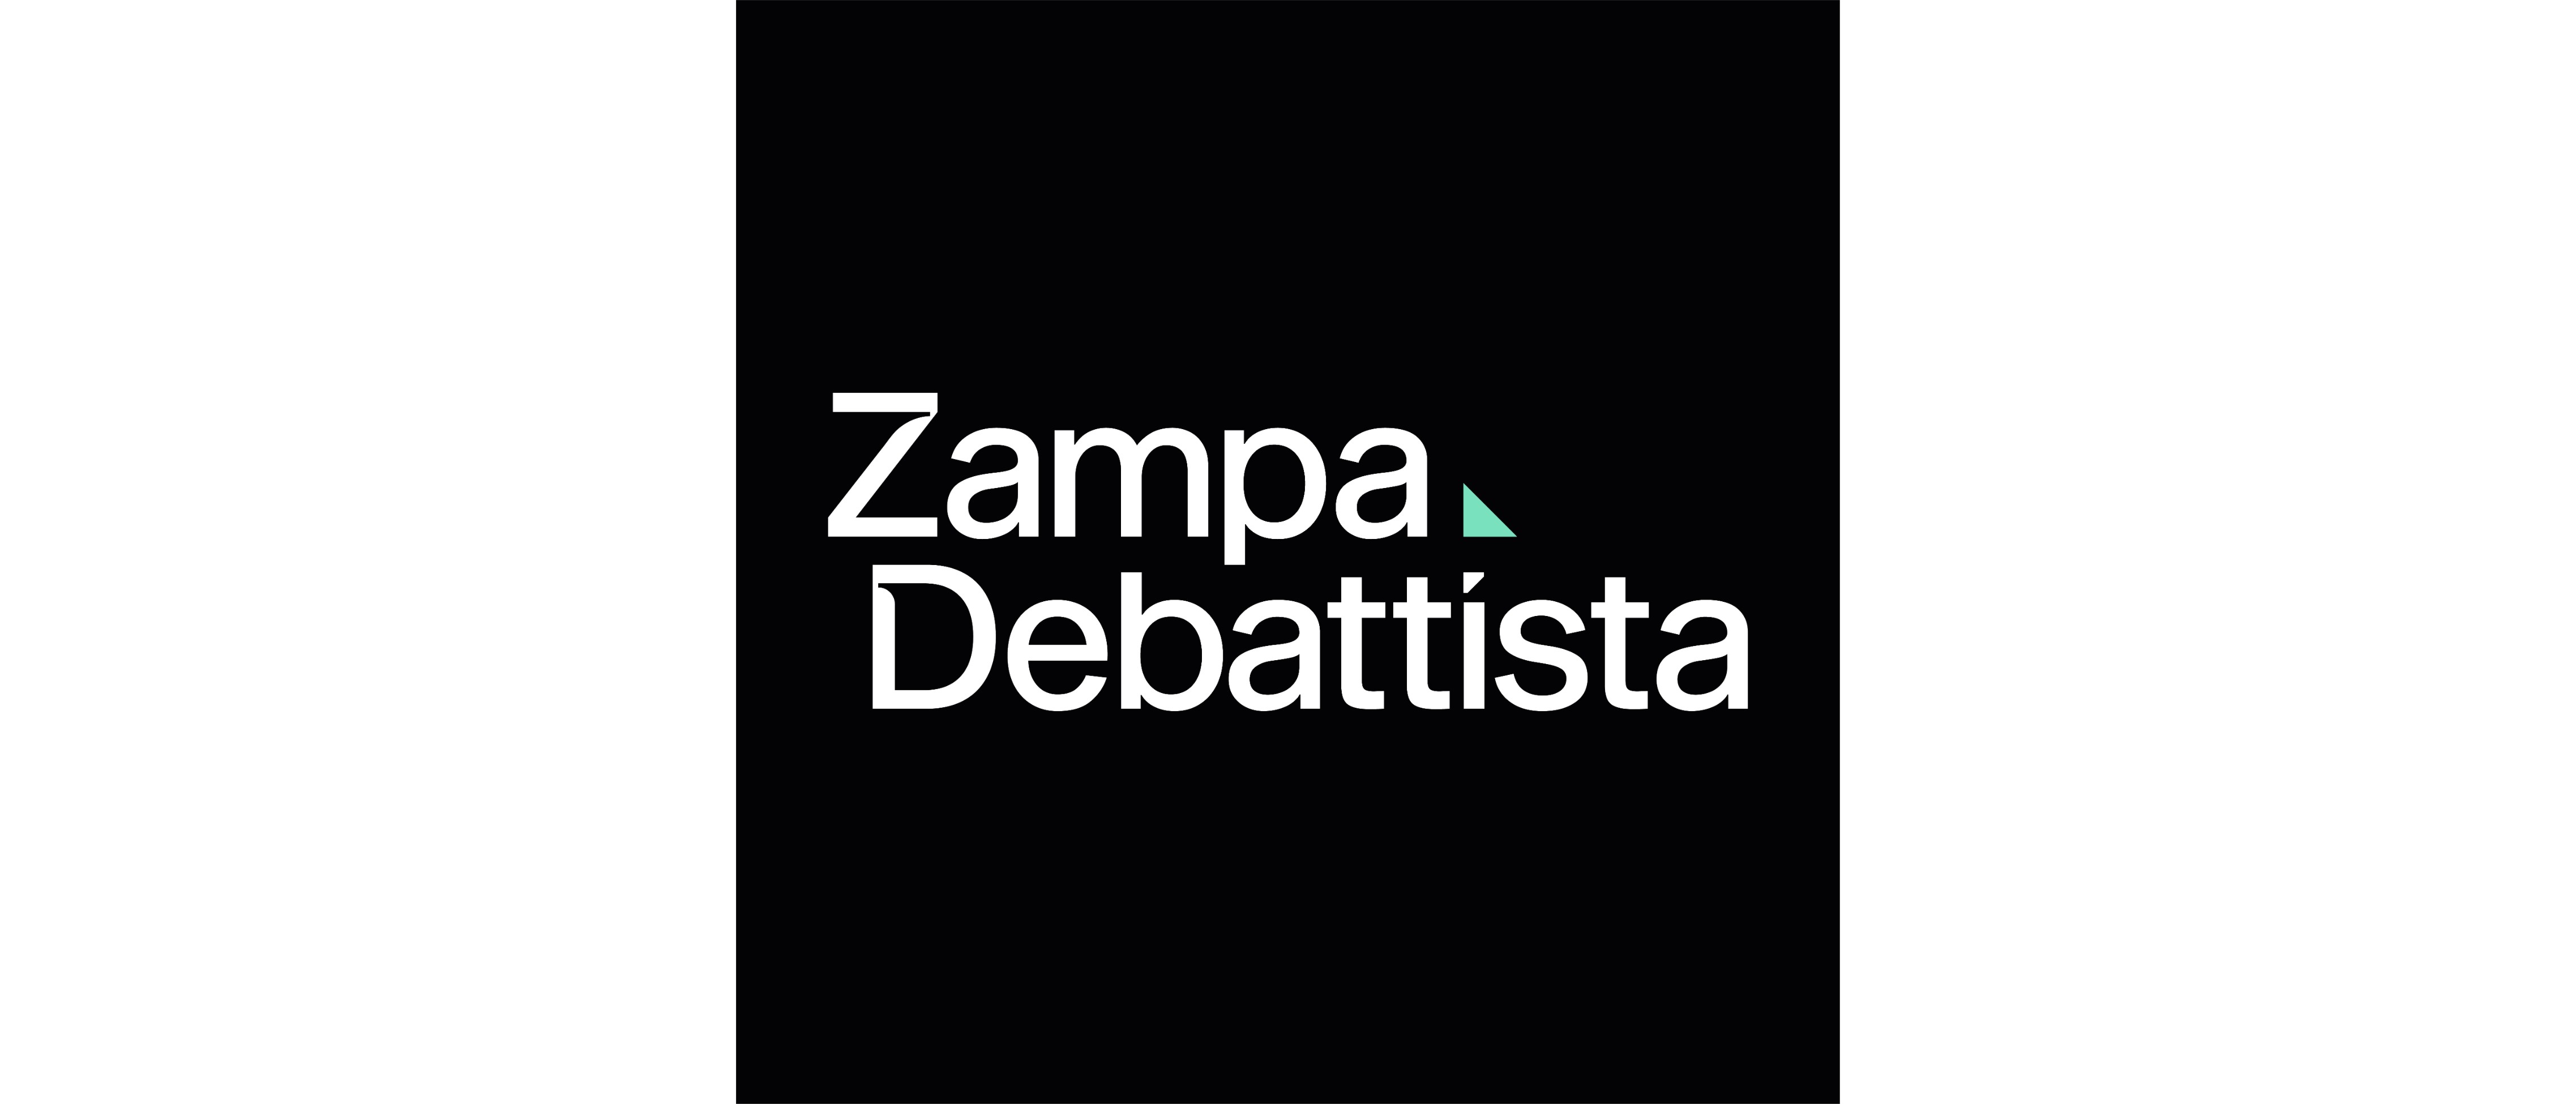 Zampa Debattista